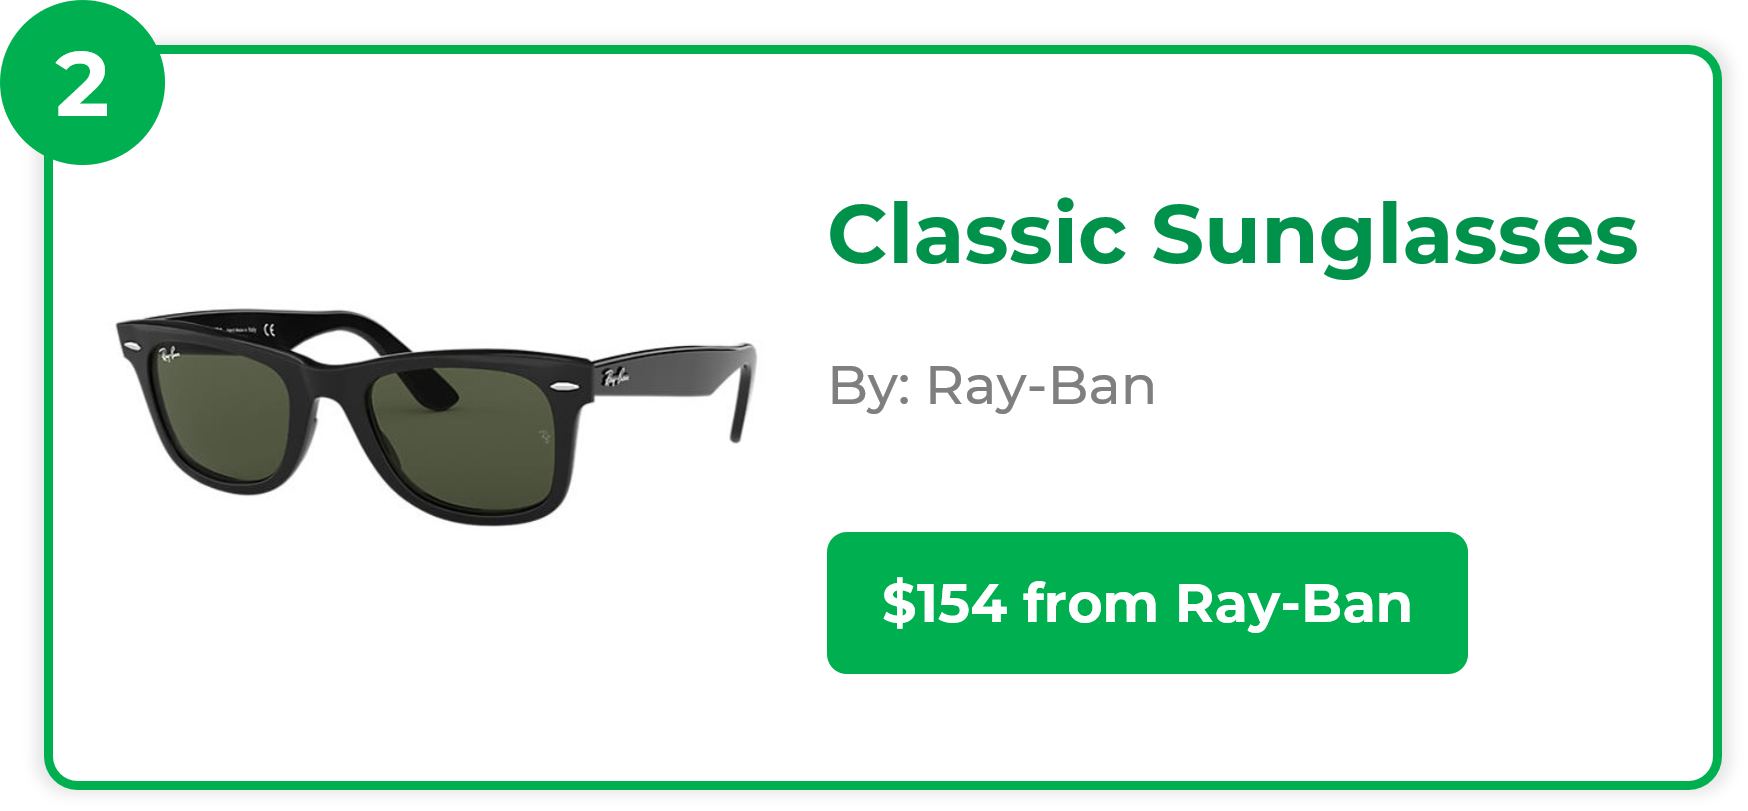 Classic Sunglasses - Ray-Ban